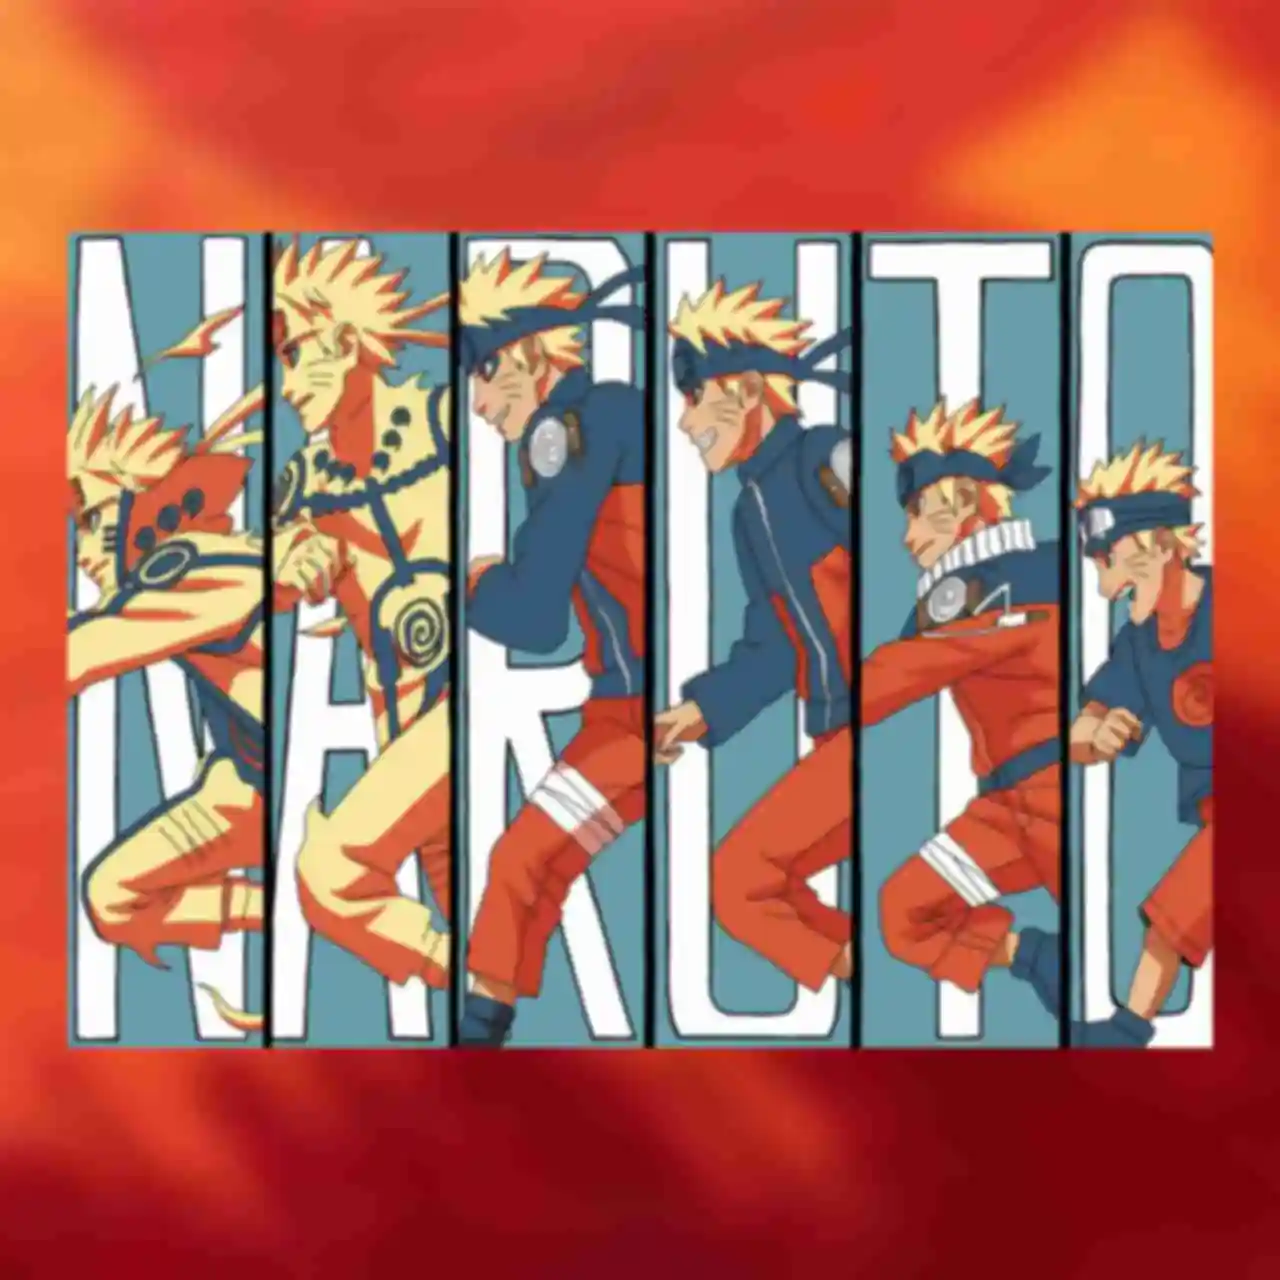 Постер №5 ⦁ Становление Наруто ⦁ Плакат ⦁ Подарки и сувениры в стиле аниме Naruto. Фото №89